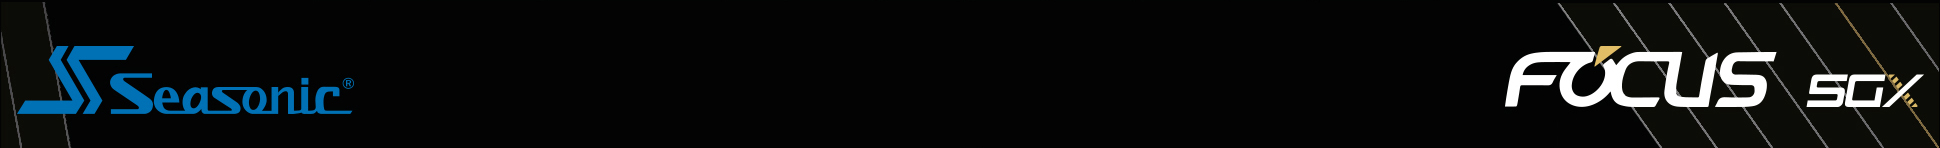 Seasonic logo and Focus SGX icon